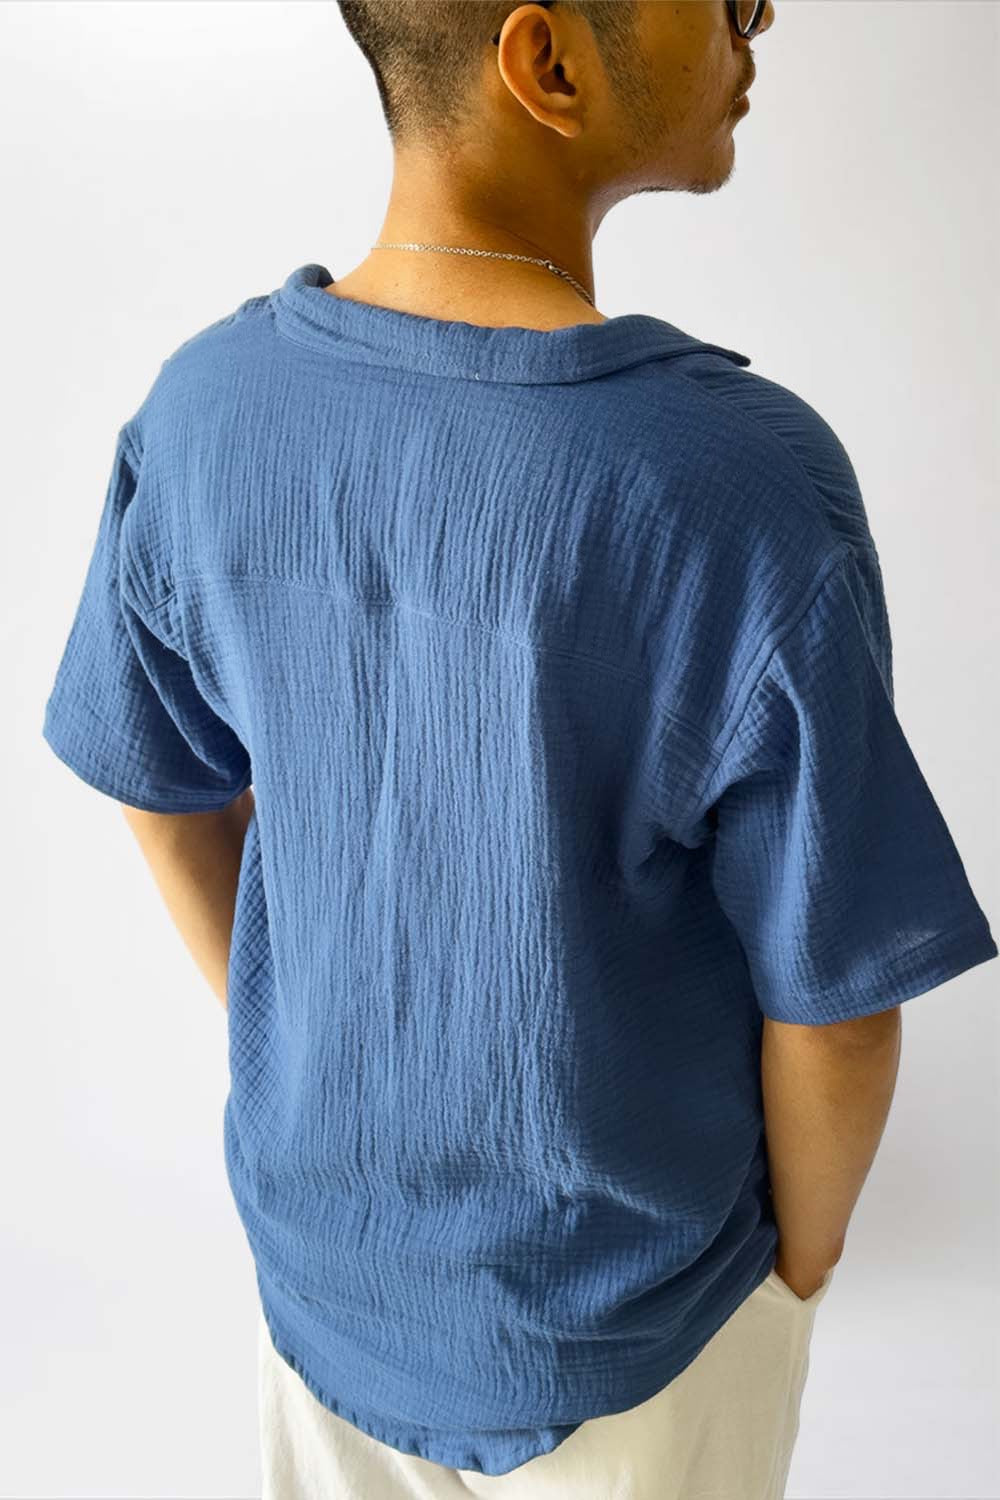 Umalas Shirt: Premium Cotton Soft Shirt